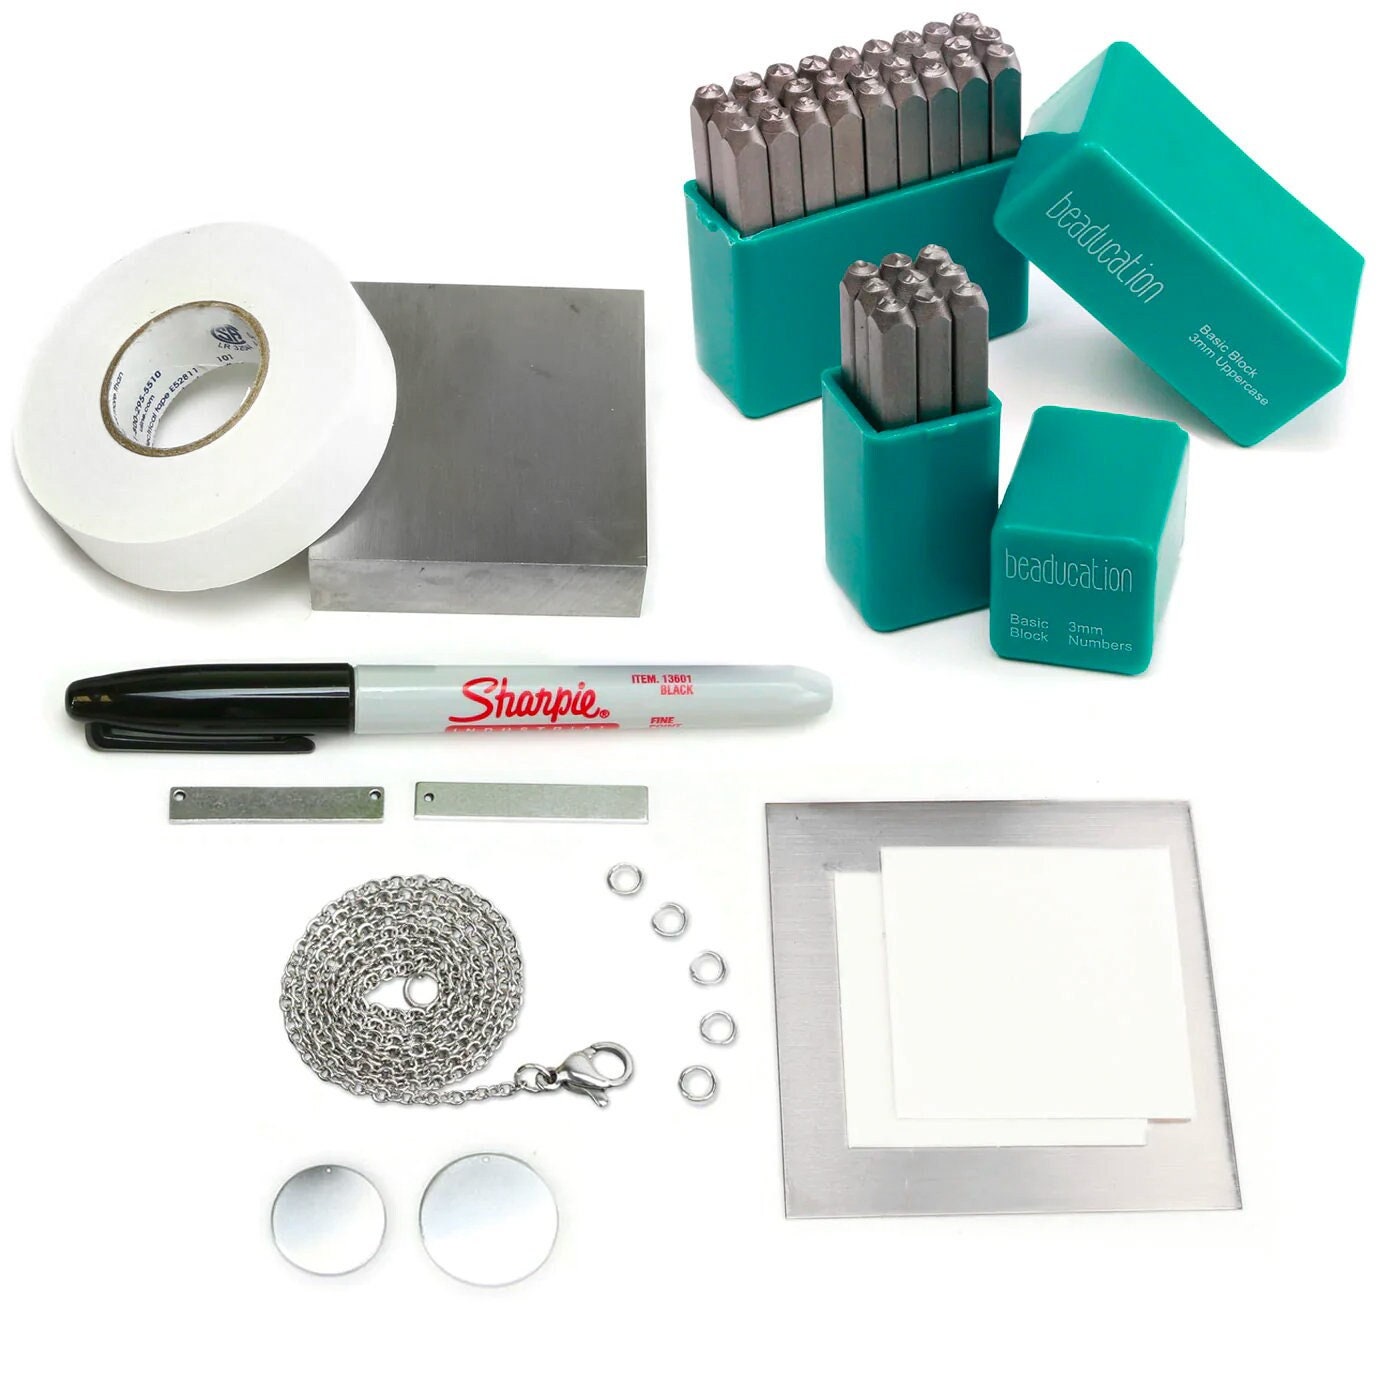 Beginner Metal Stamping Kit, Starter Stamp Kit Beaducation Metal Stamping  Punch Tools and Supplies for Hand Stamped Jewelry Making KIT01 